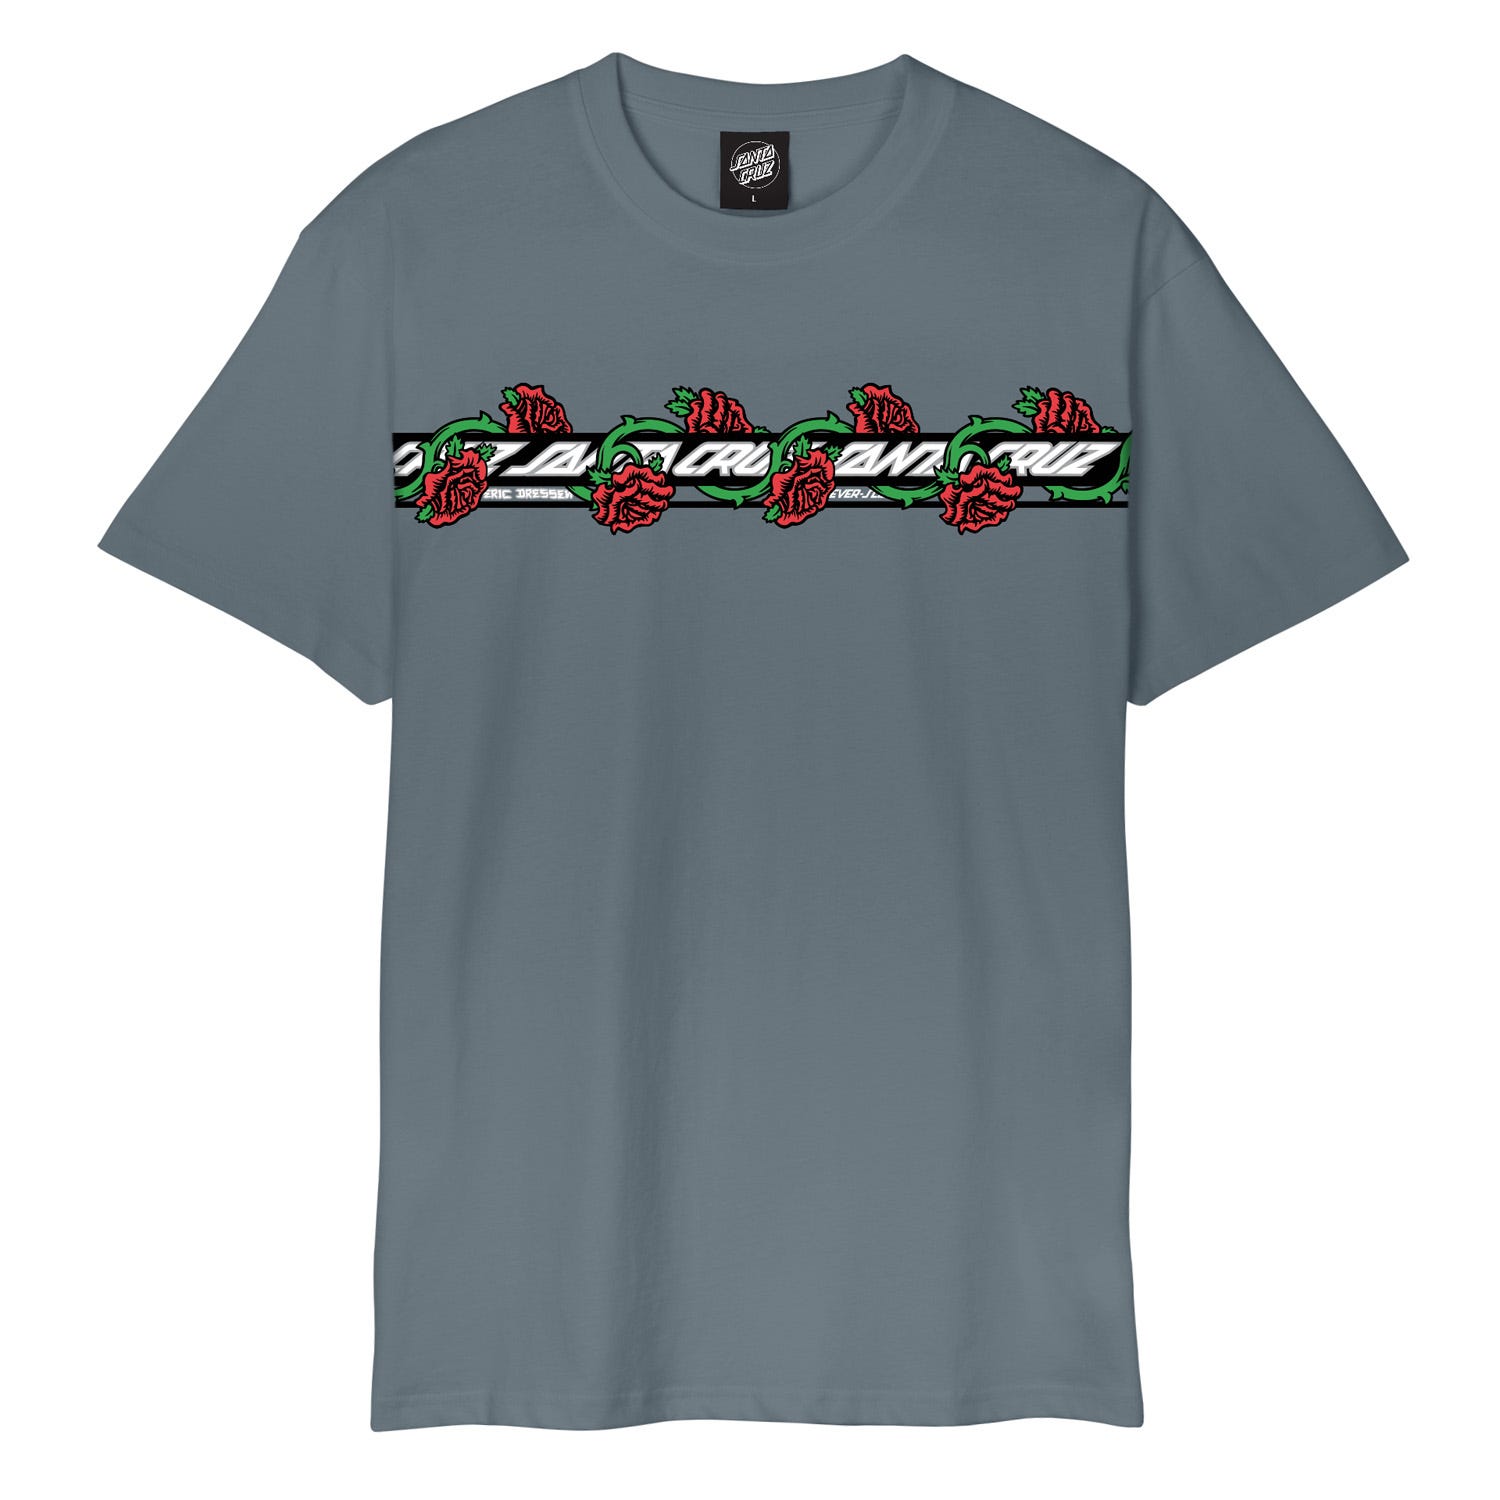 Santa Cruz | Dressen Roses Ever-Slick T-Shirt (Iron)